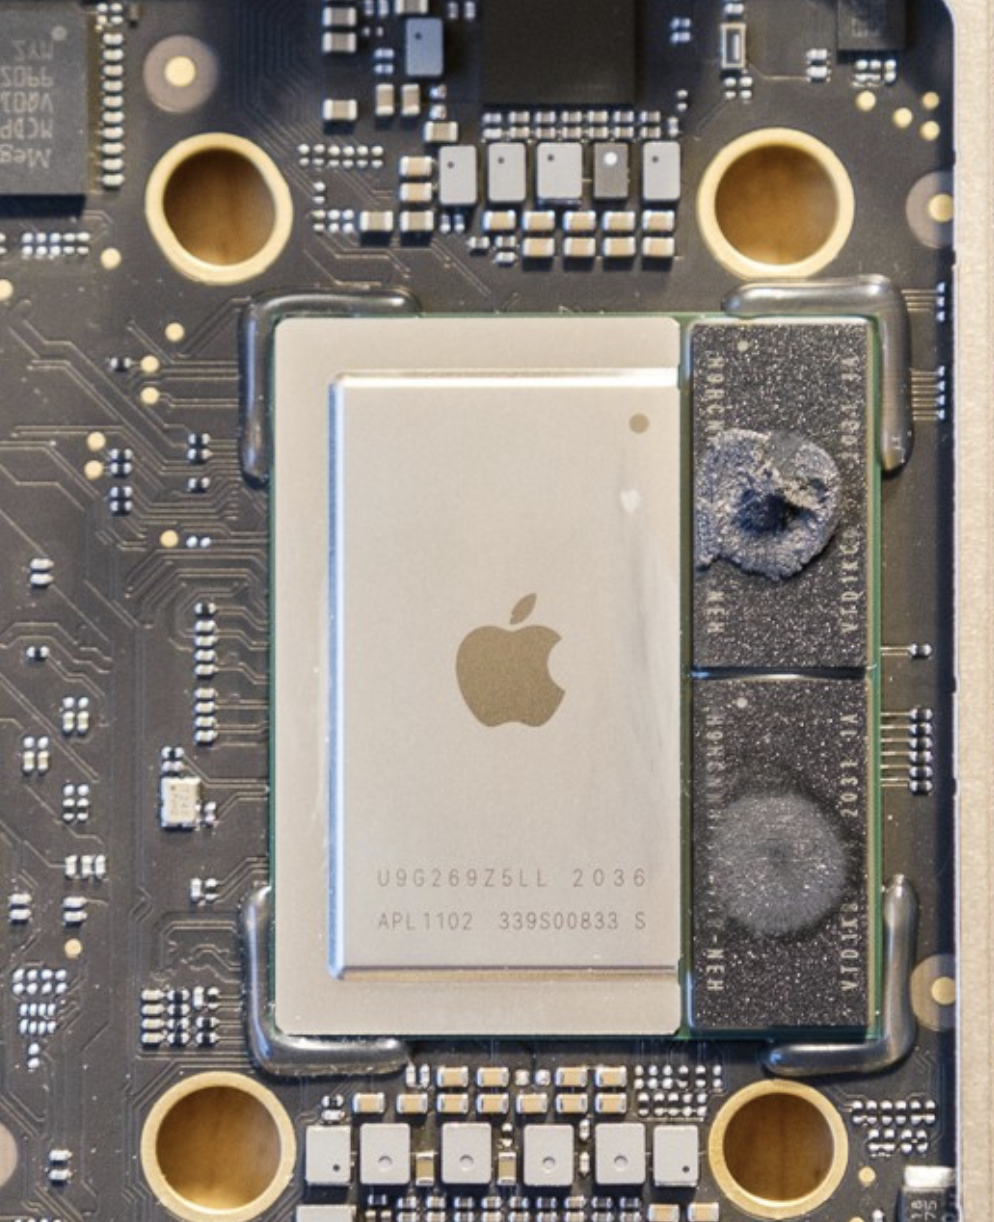 Mac Mini Teardown Provides Real-World Look at M1 Chip on Smaller Logic